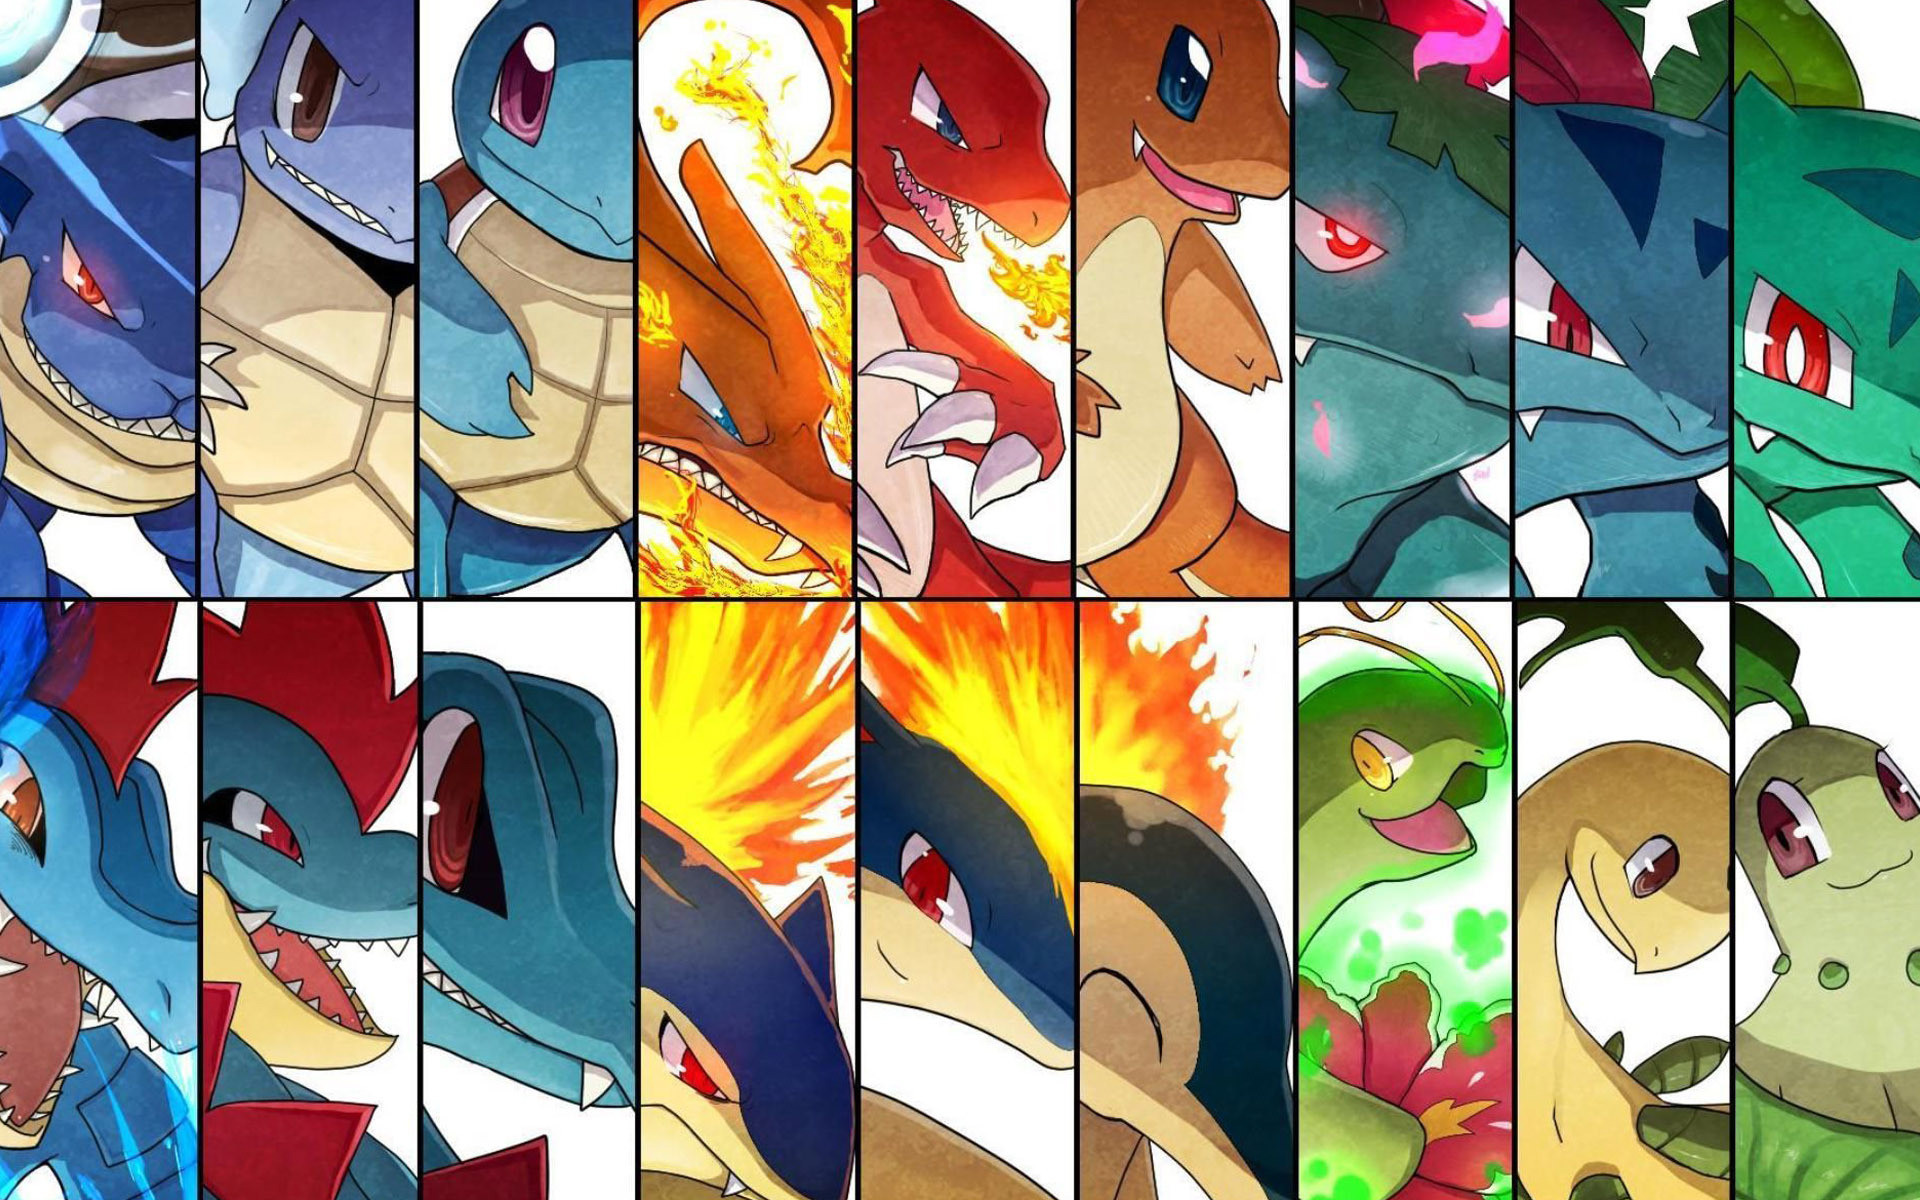 Download Charizard - A Powerful Dragon-type Pokémon Wallpaper | Wallpapers .com